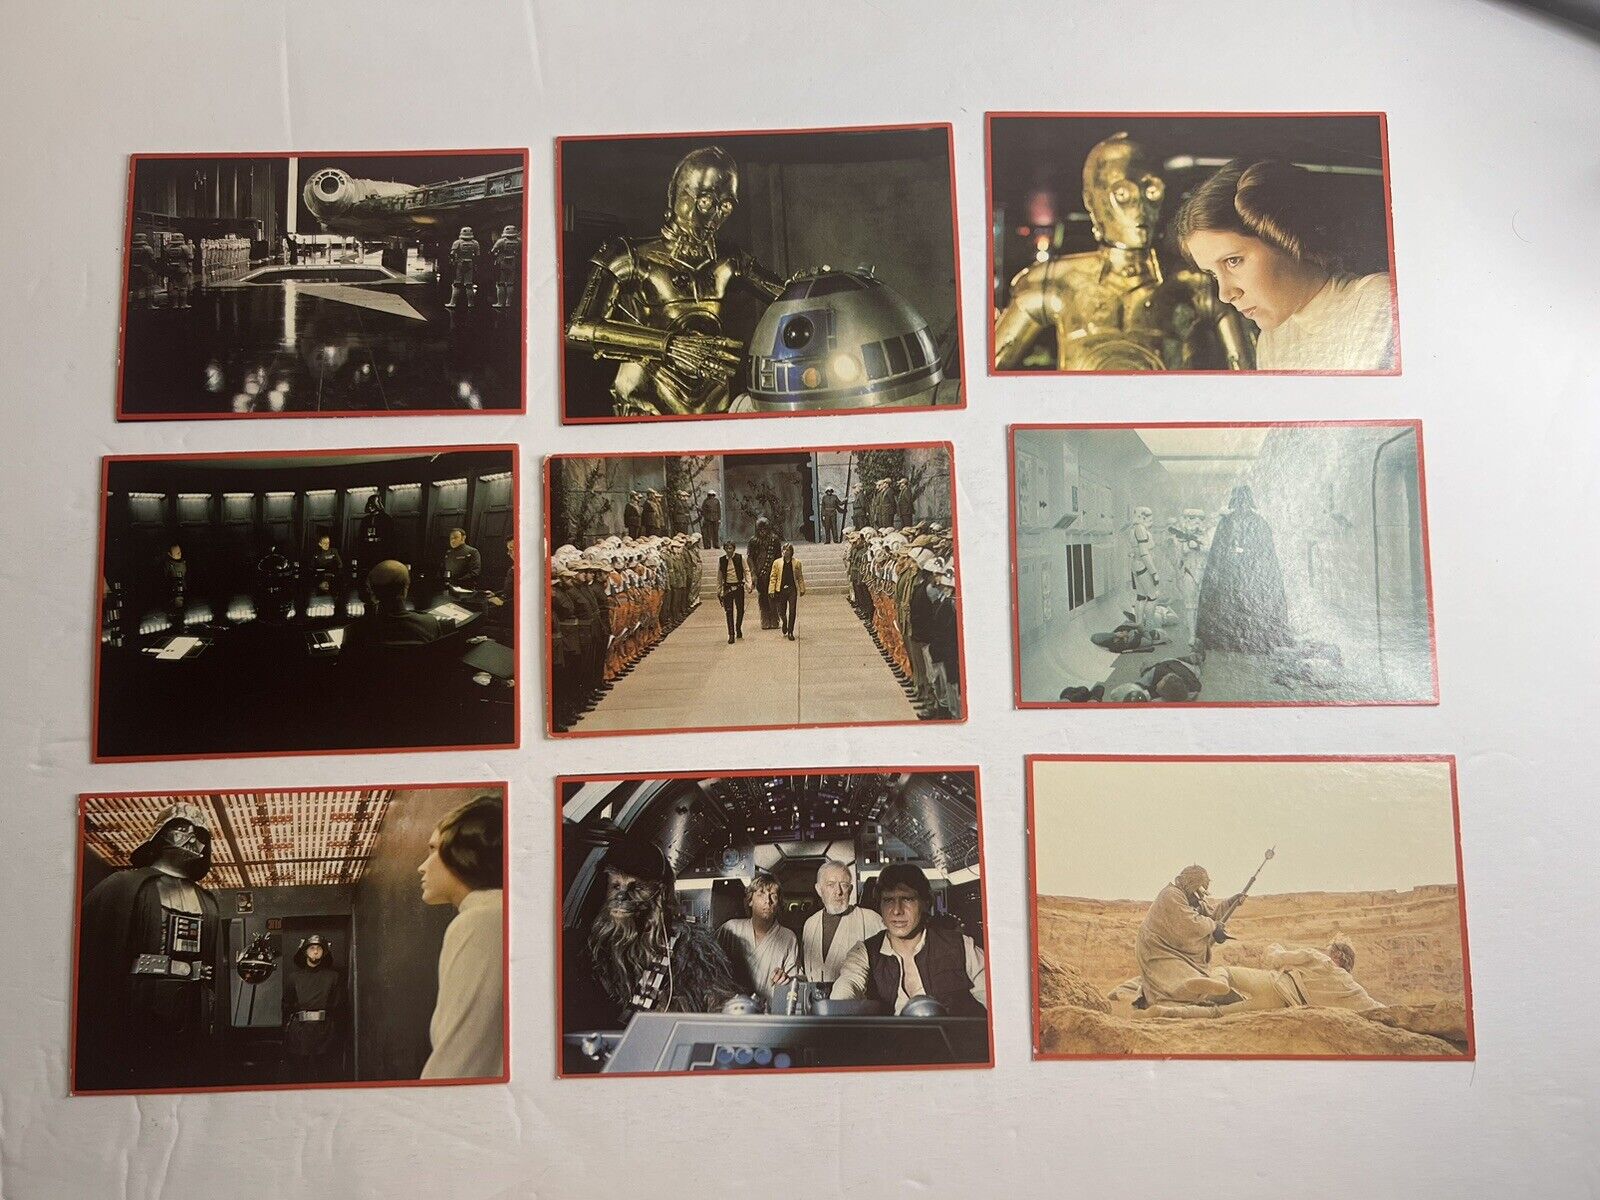 Vintage Star Wars Card Cutouts - lot of 9 movie scenes